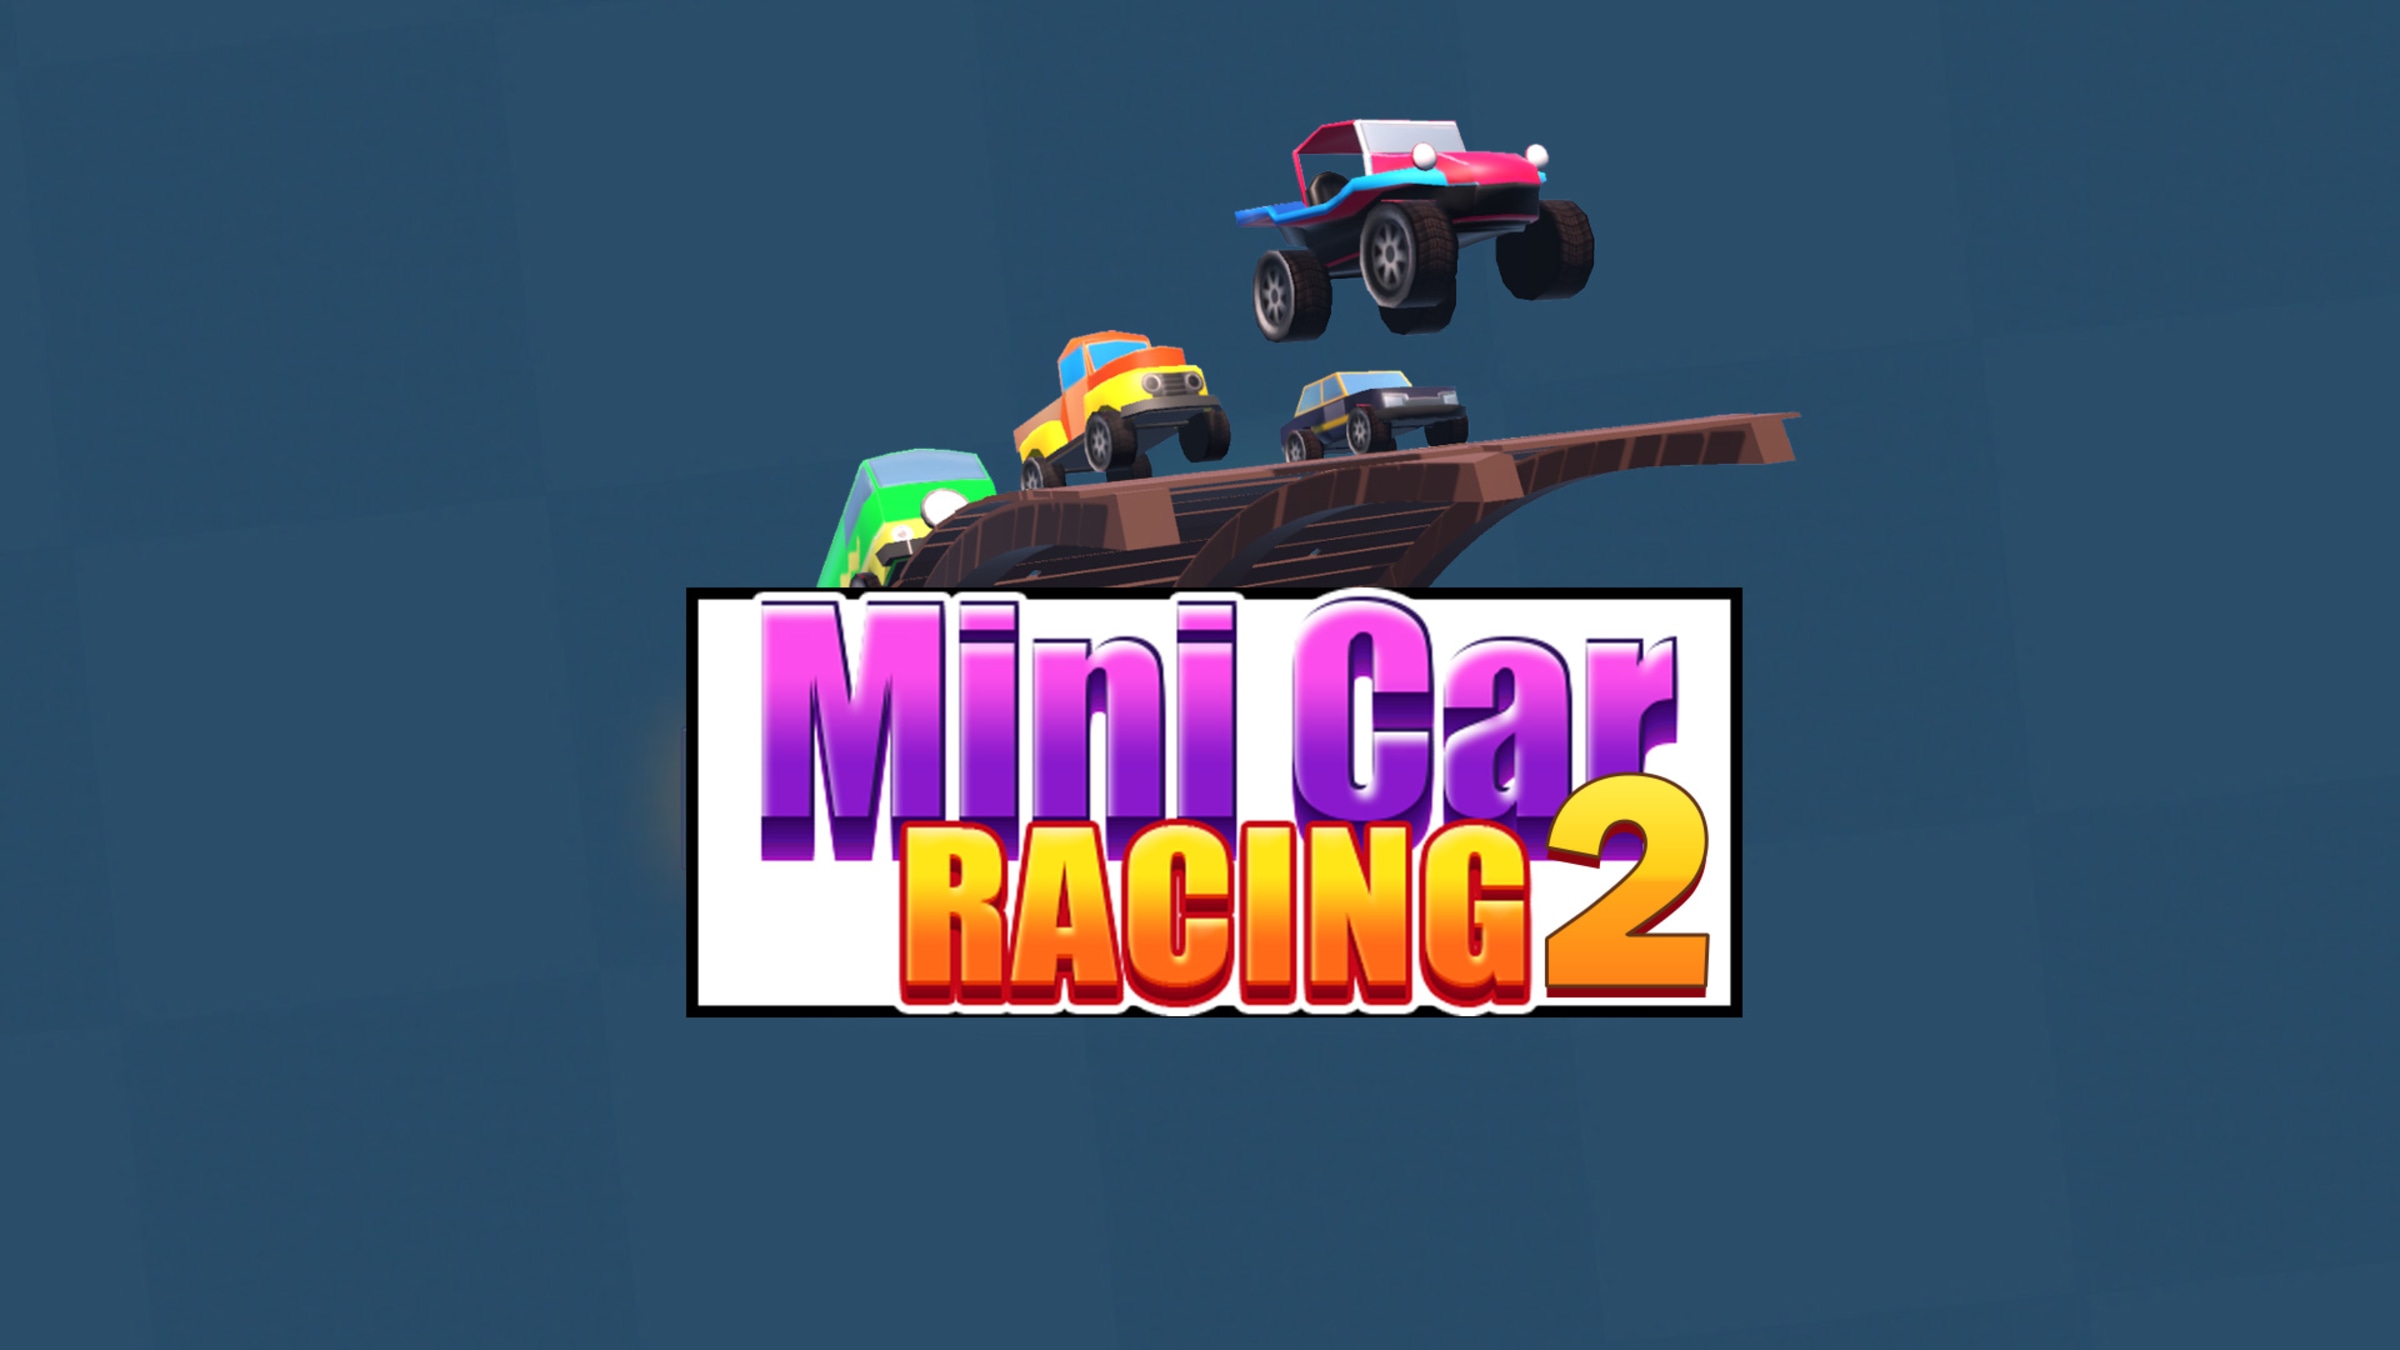 Mini Arcade - Two player games Mod apk download - Mini Arcade - Two player  games MOD apk free for Android.